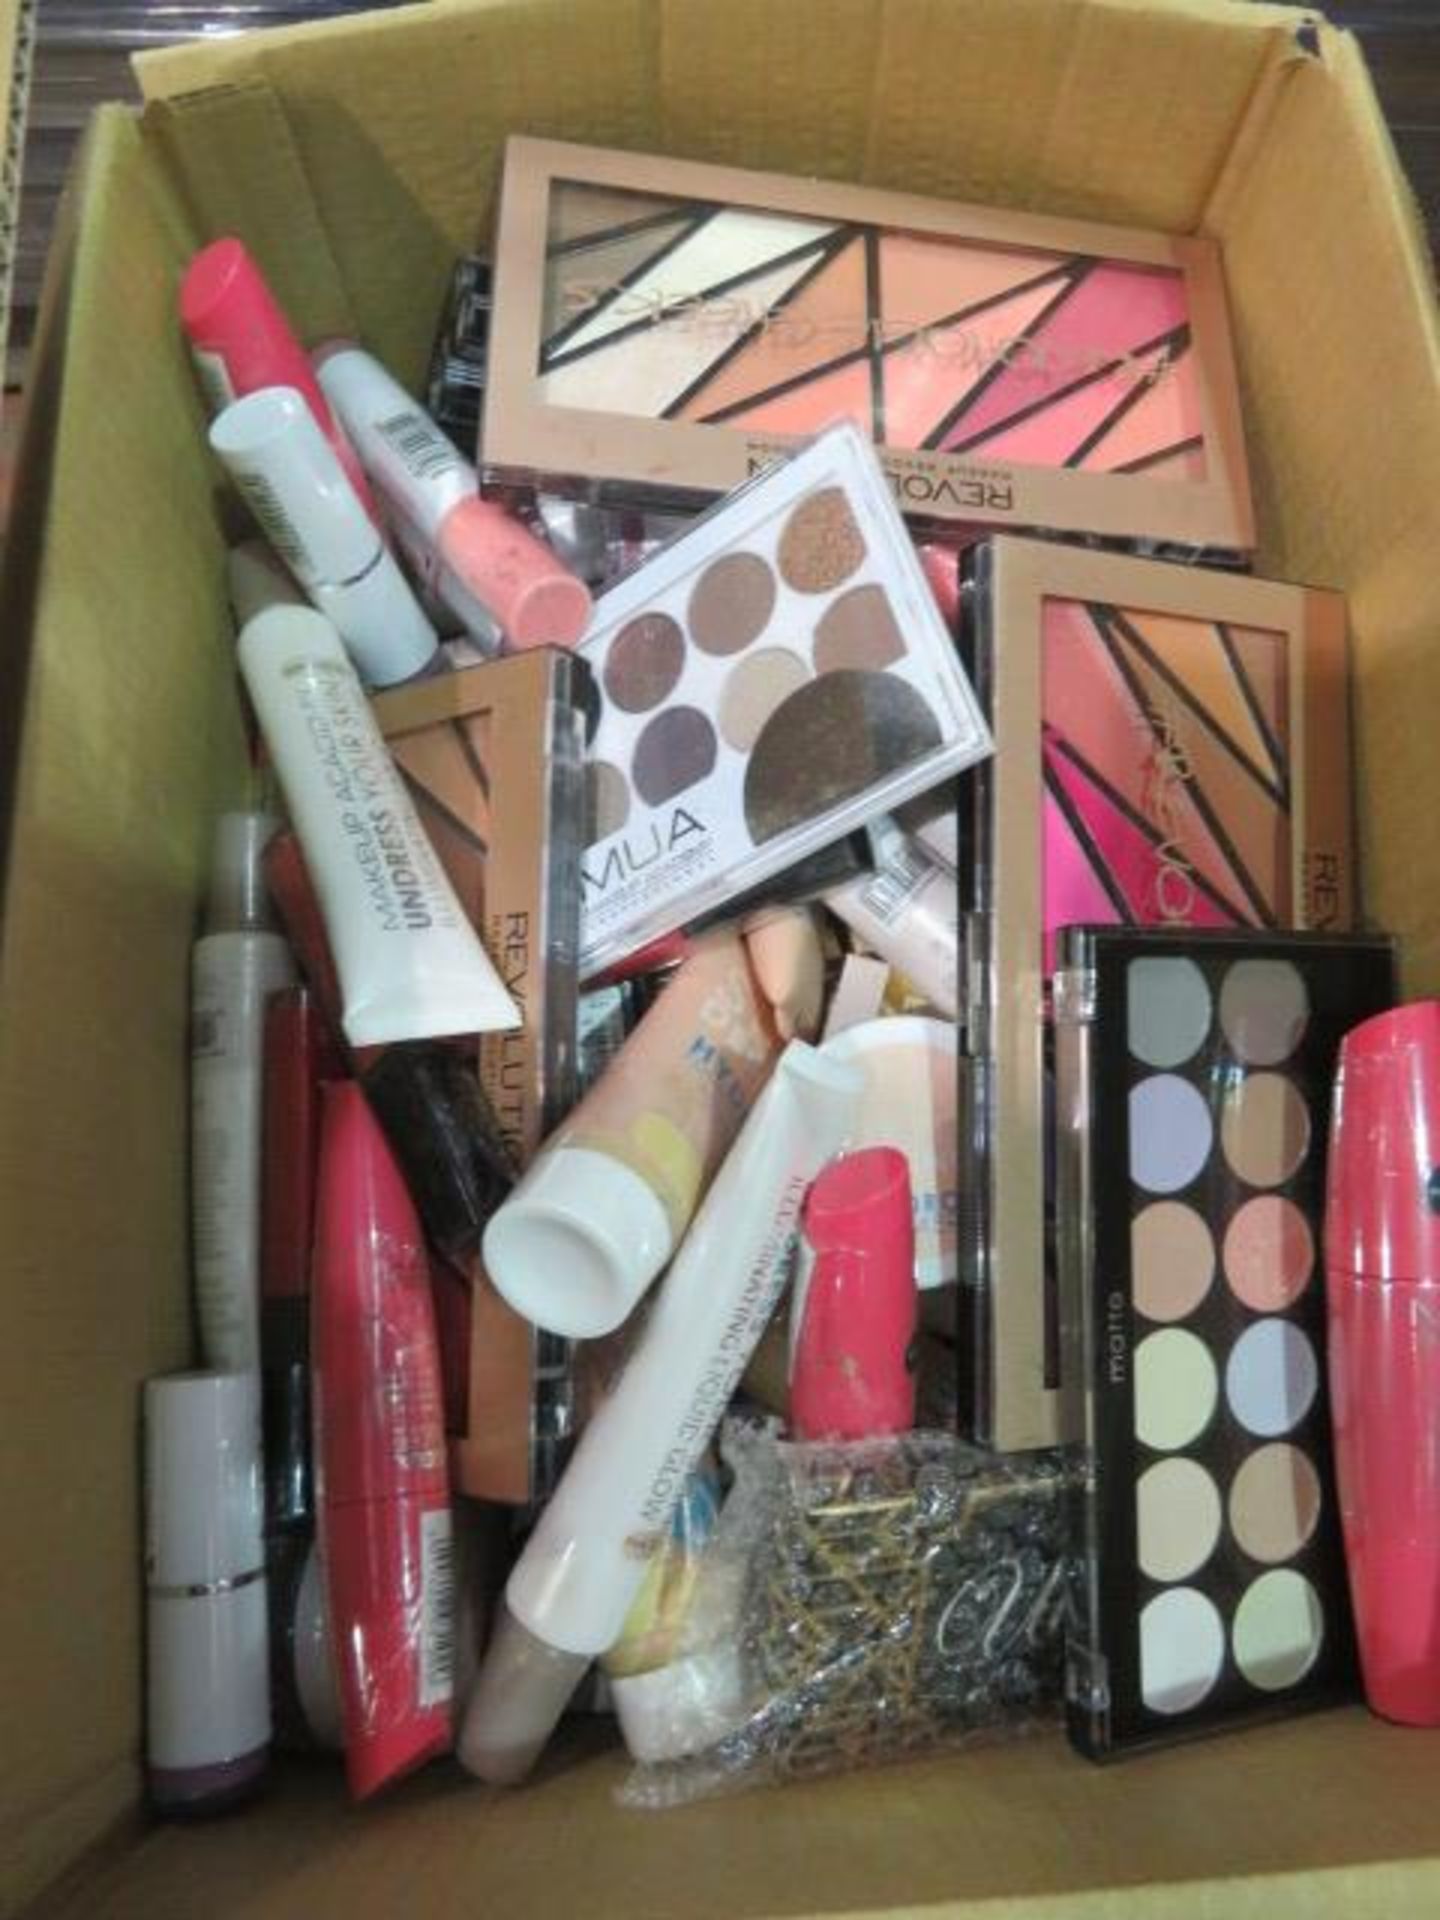 Circa. 200 items of various new make up acadamy make up to include: mega volume mascara, hydro